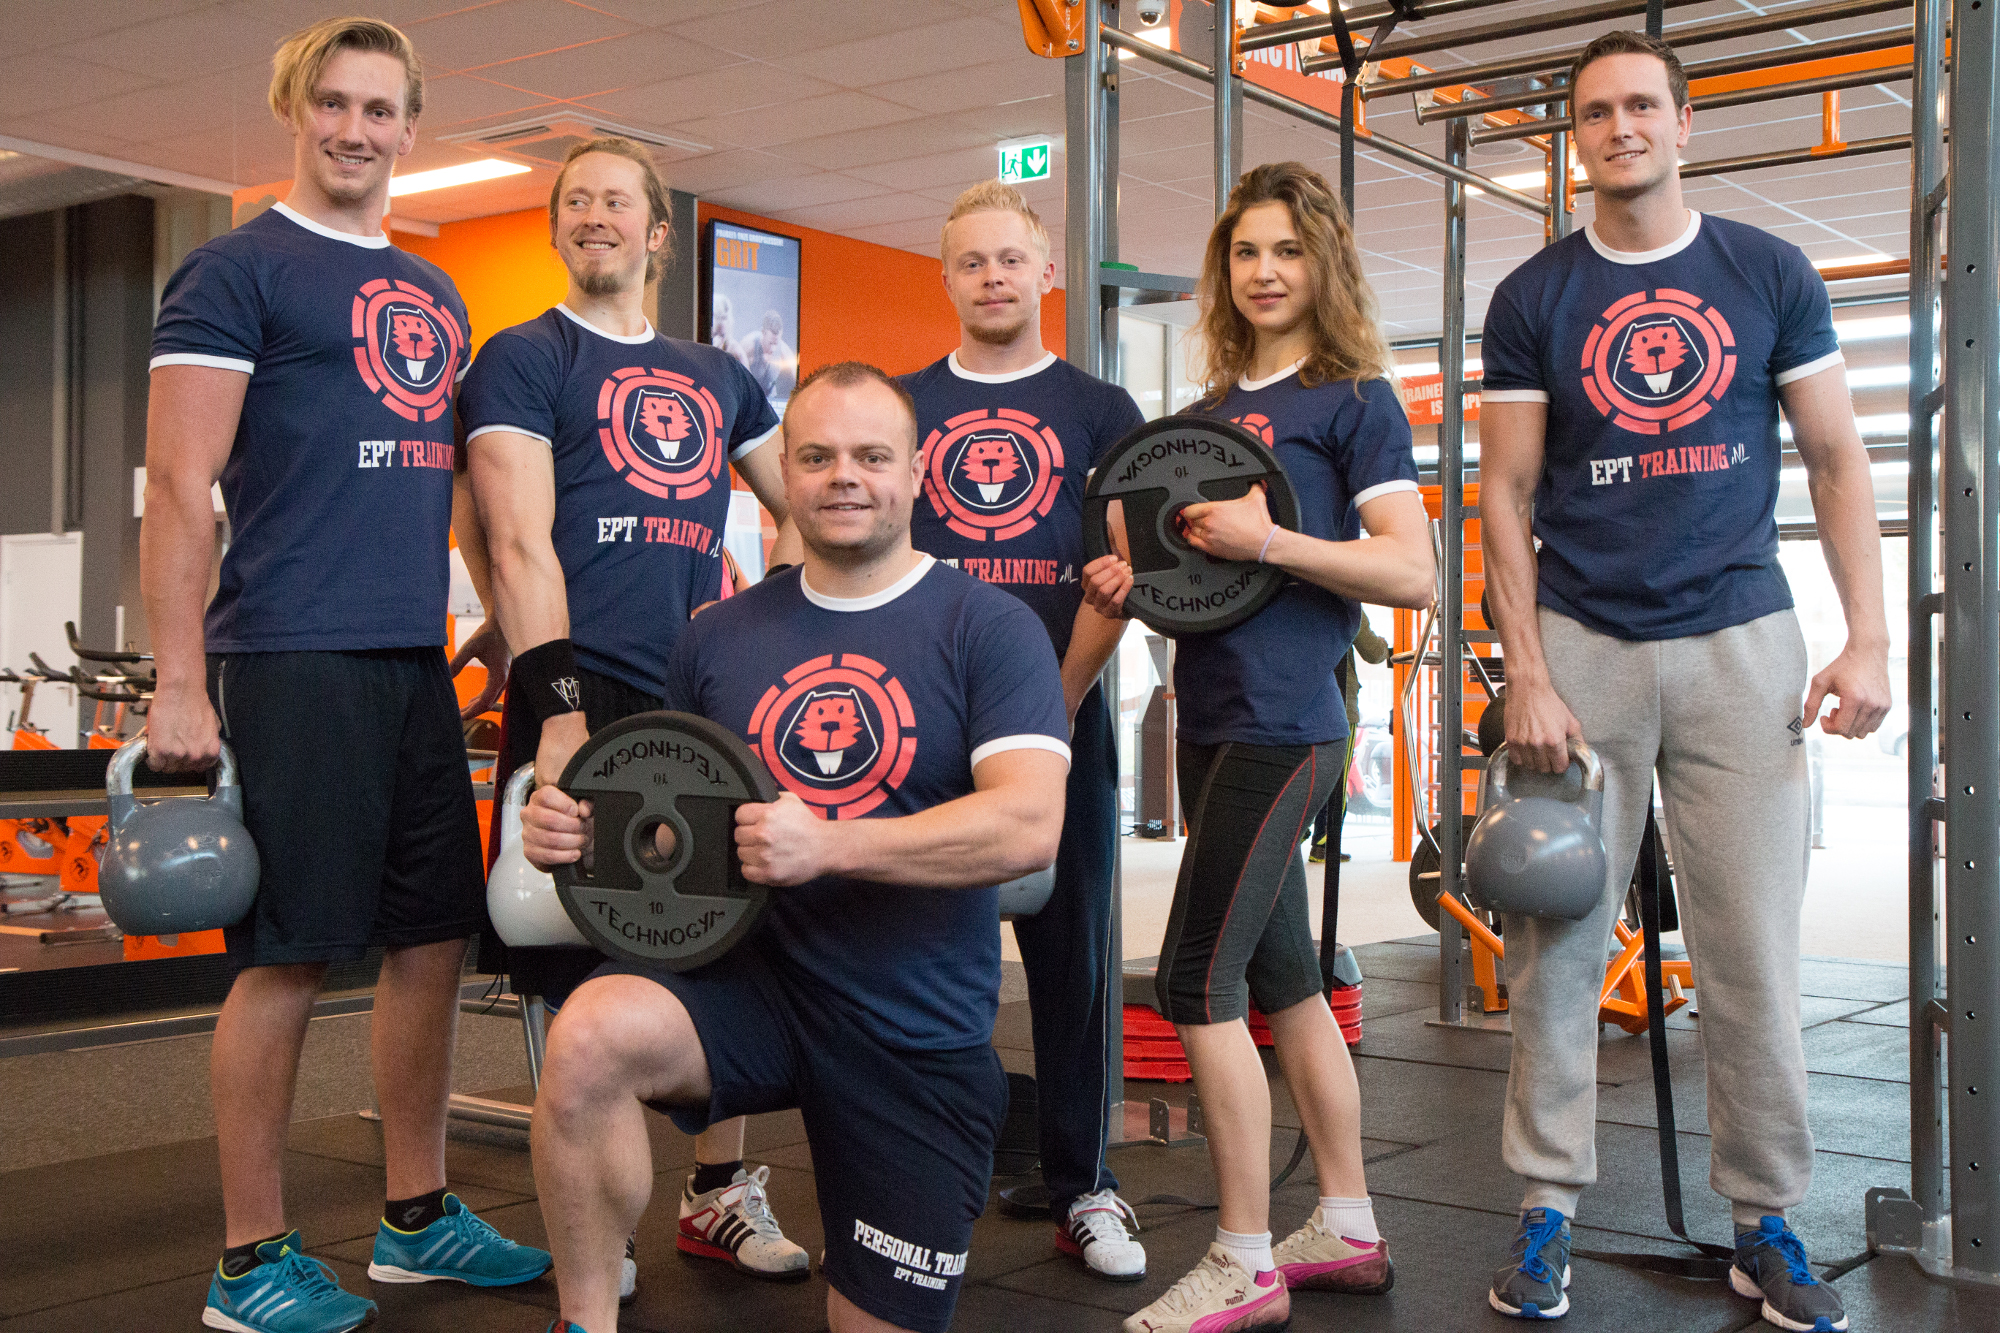 Fitness Heemstede - Personal Trainer In Haarlem En Zandvoort   Paul Witte